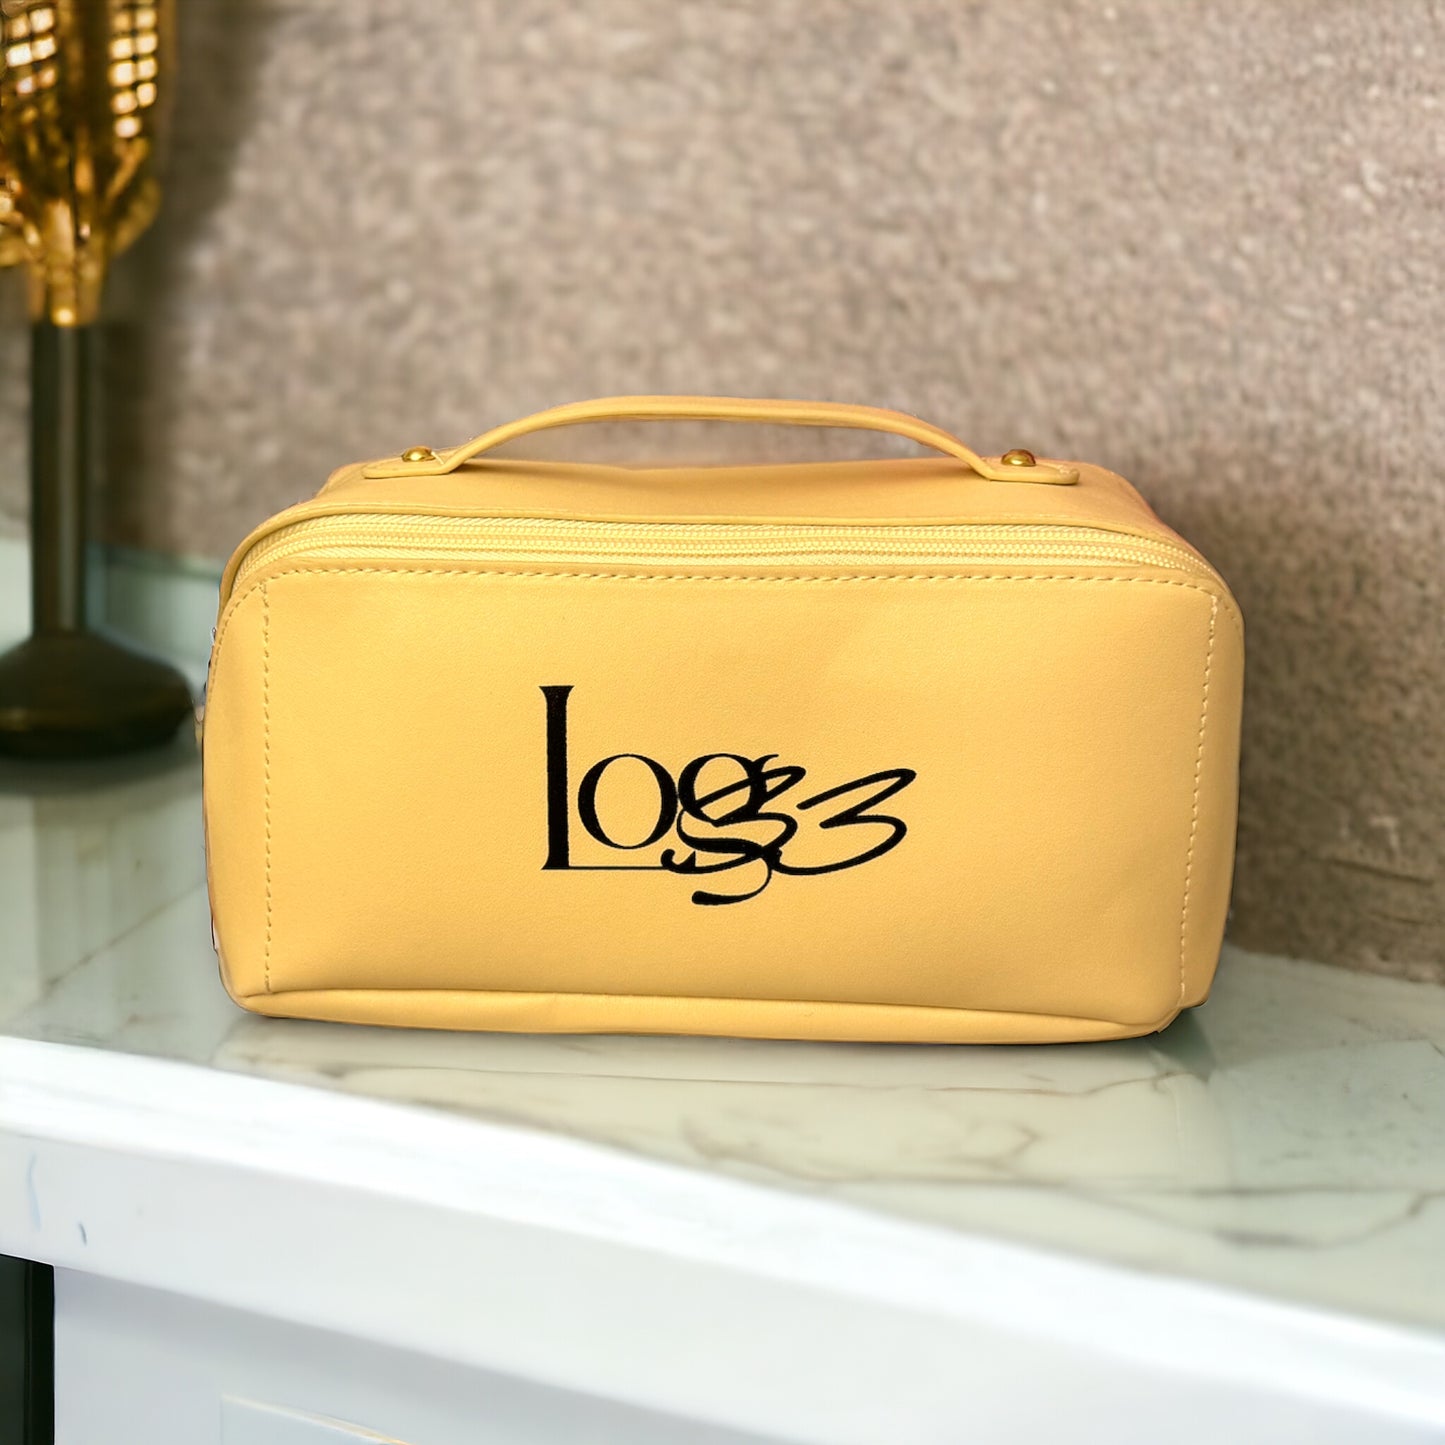 Log33 Beauty Bag